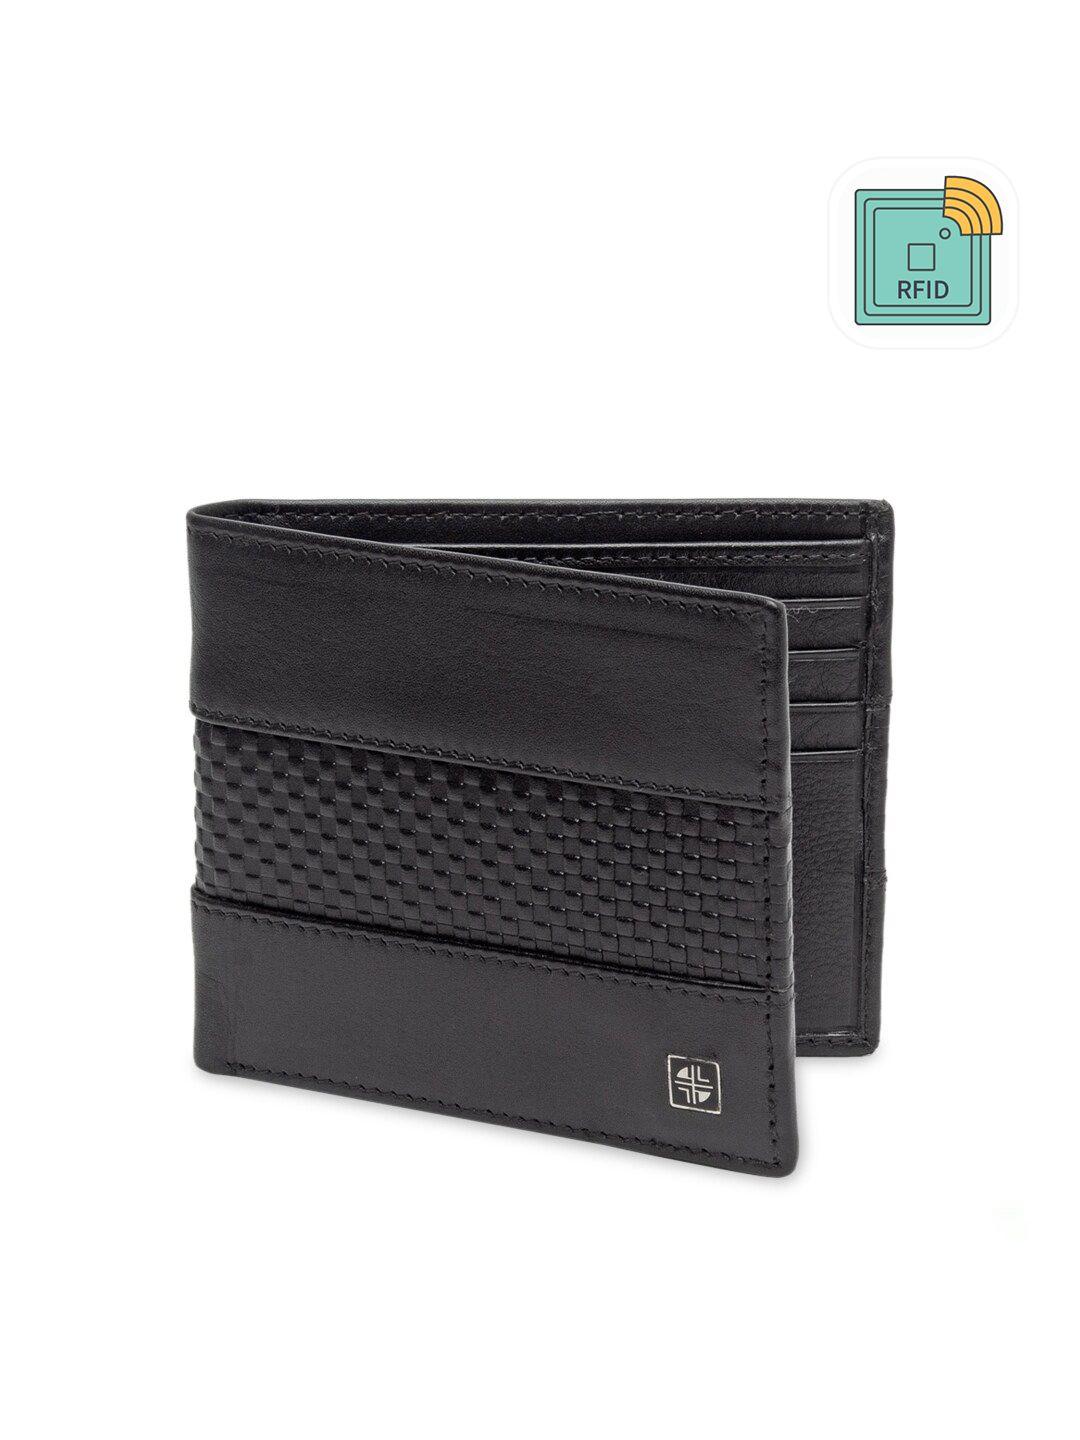 carlton london men black rfid leather two fold wallet